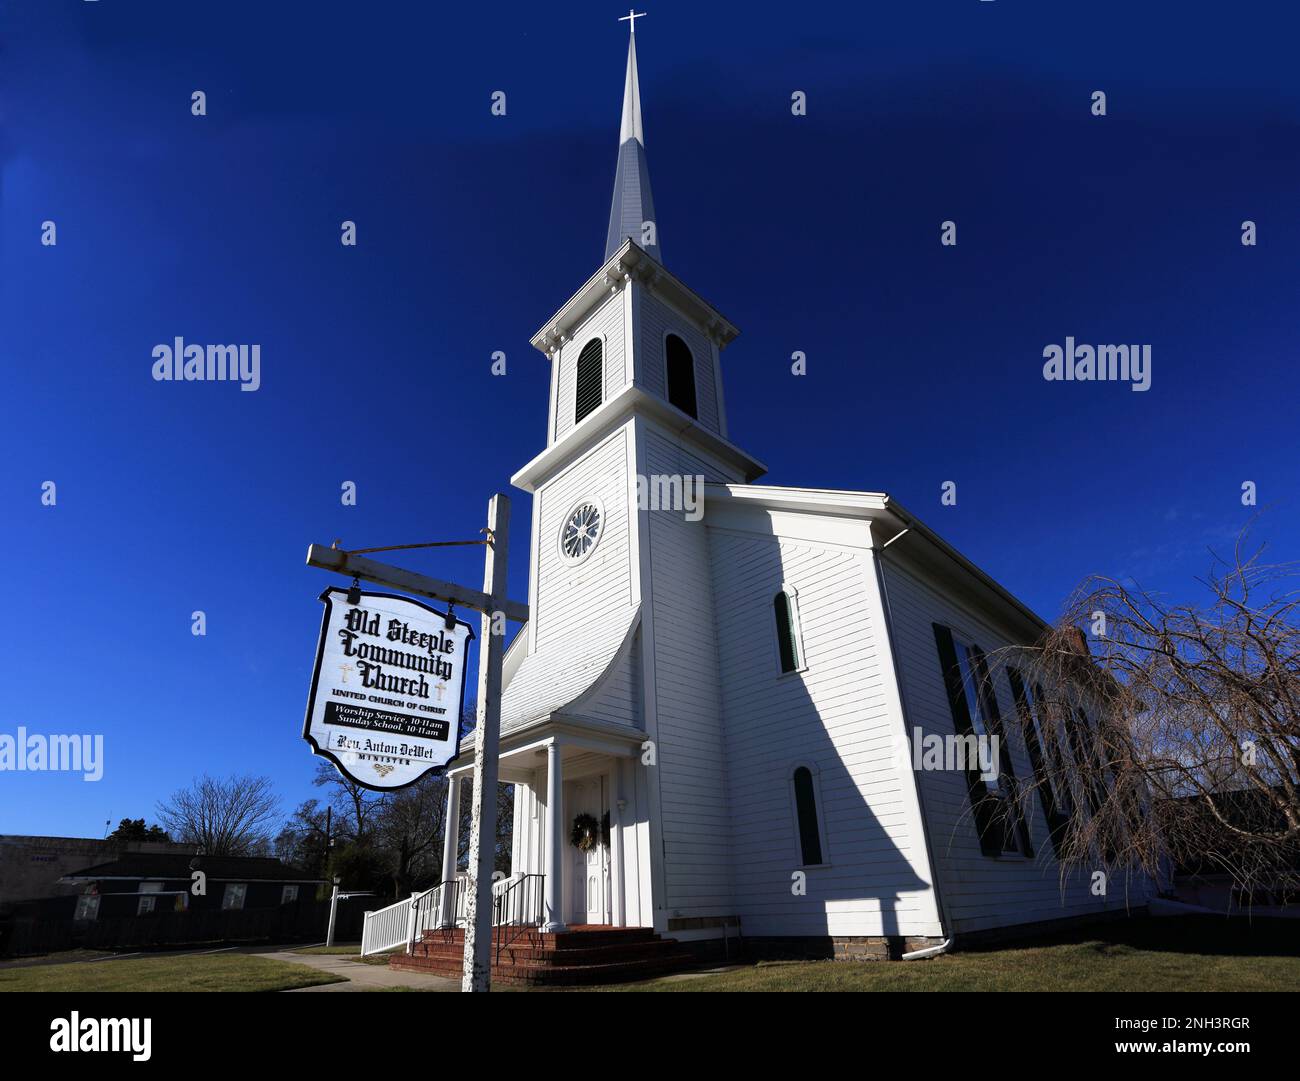 Old Steeple Community Church Aquebogue Long Island New York Stock Photo